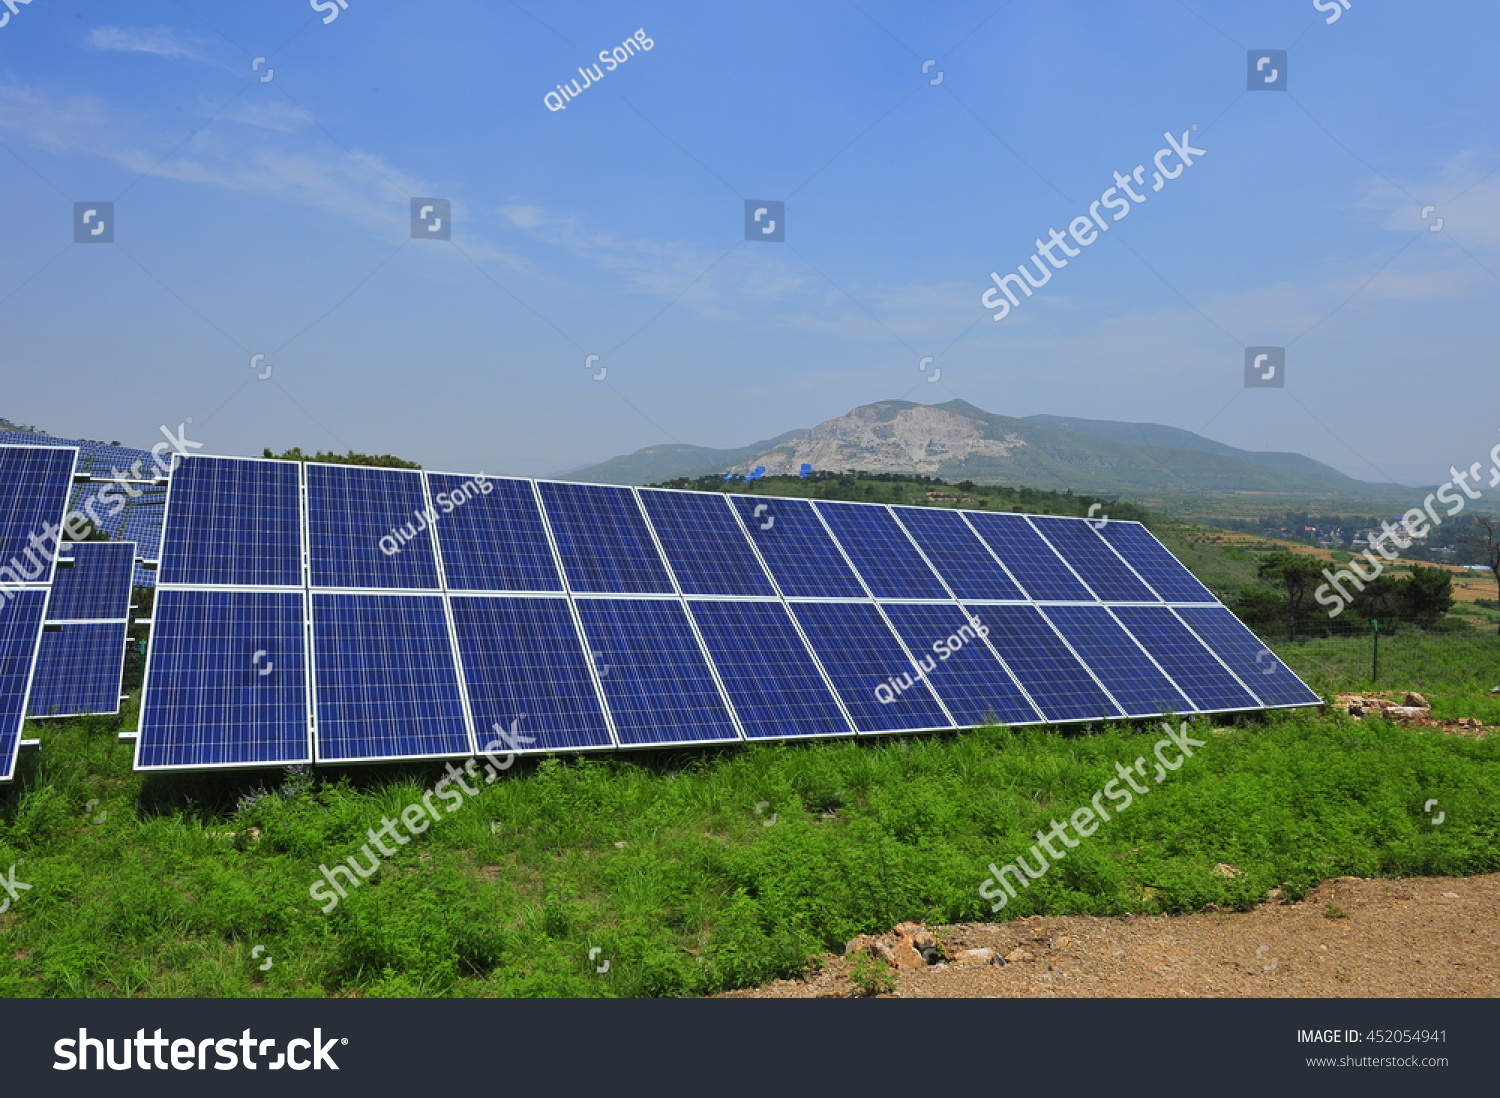 Solar Power Equipment Stock Photo 452054941 : Shutterstock